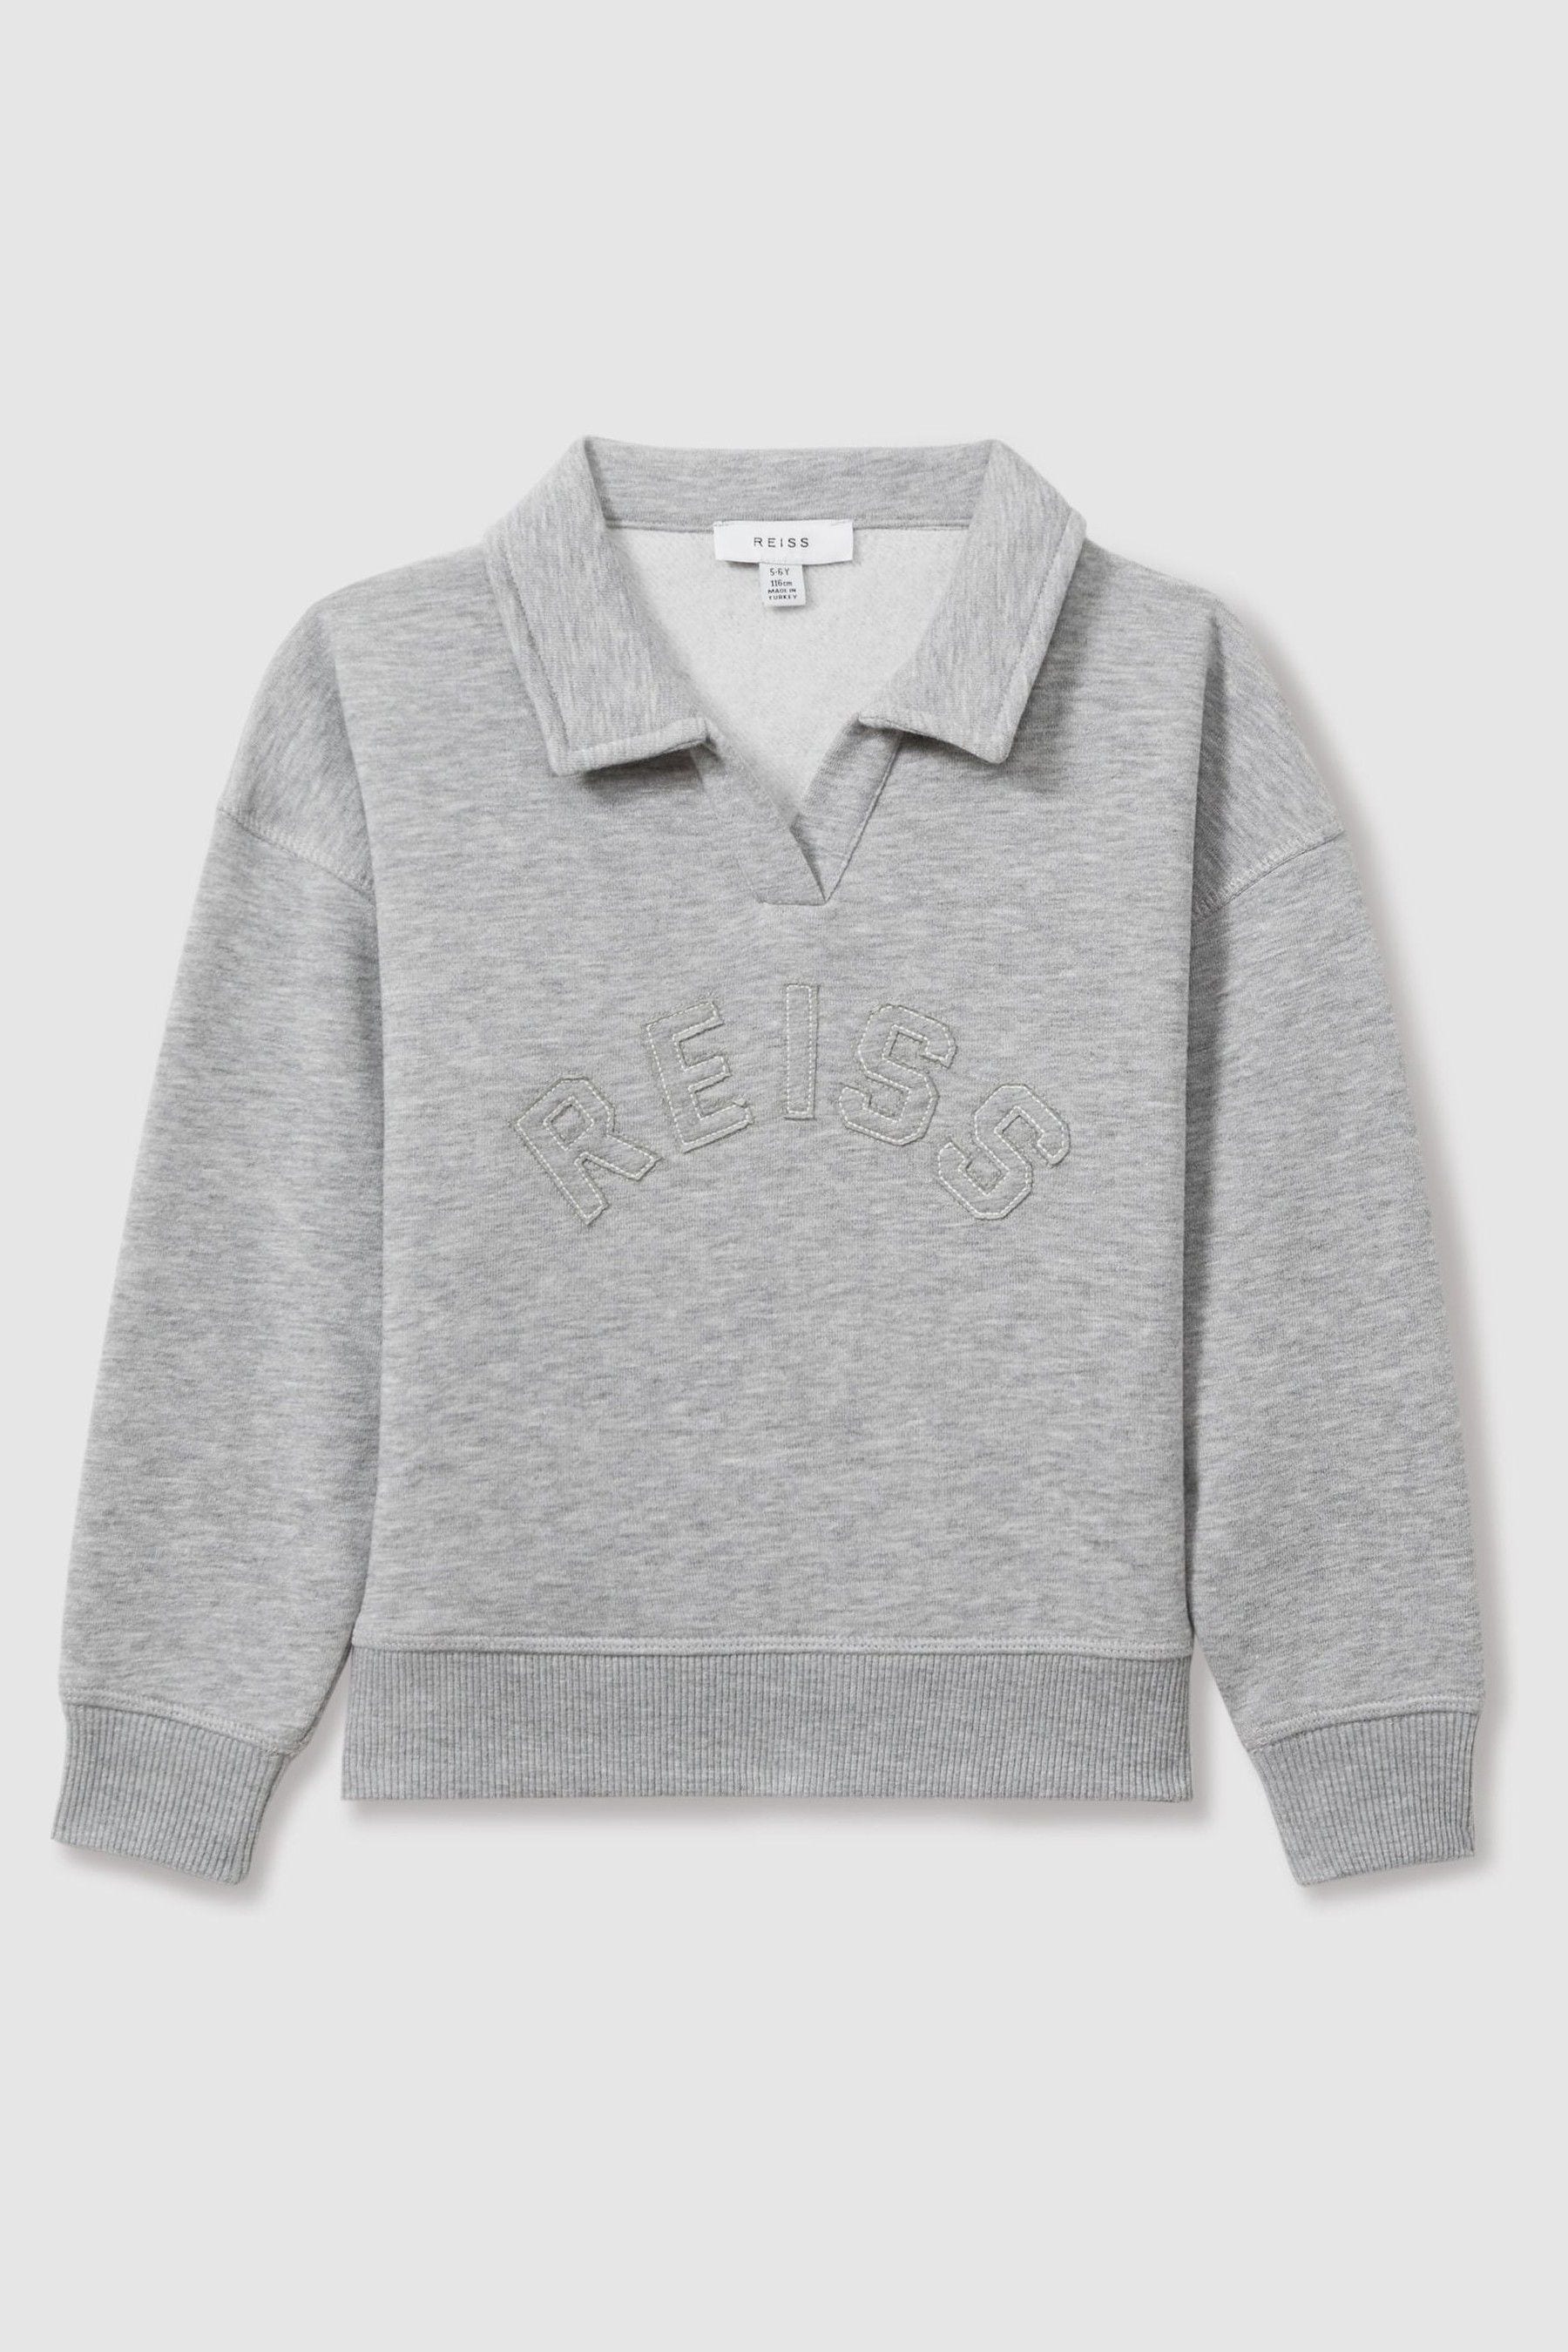 Reiss Paulina - Grey Applique Logo Sweatshirt, Uk 13-14 Yrs In Gray